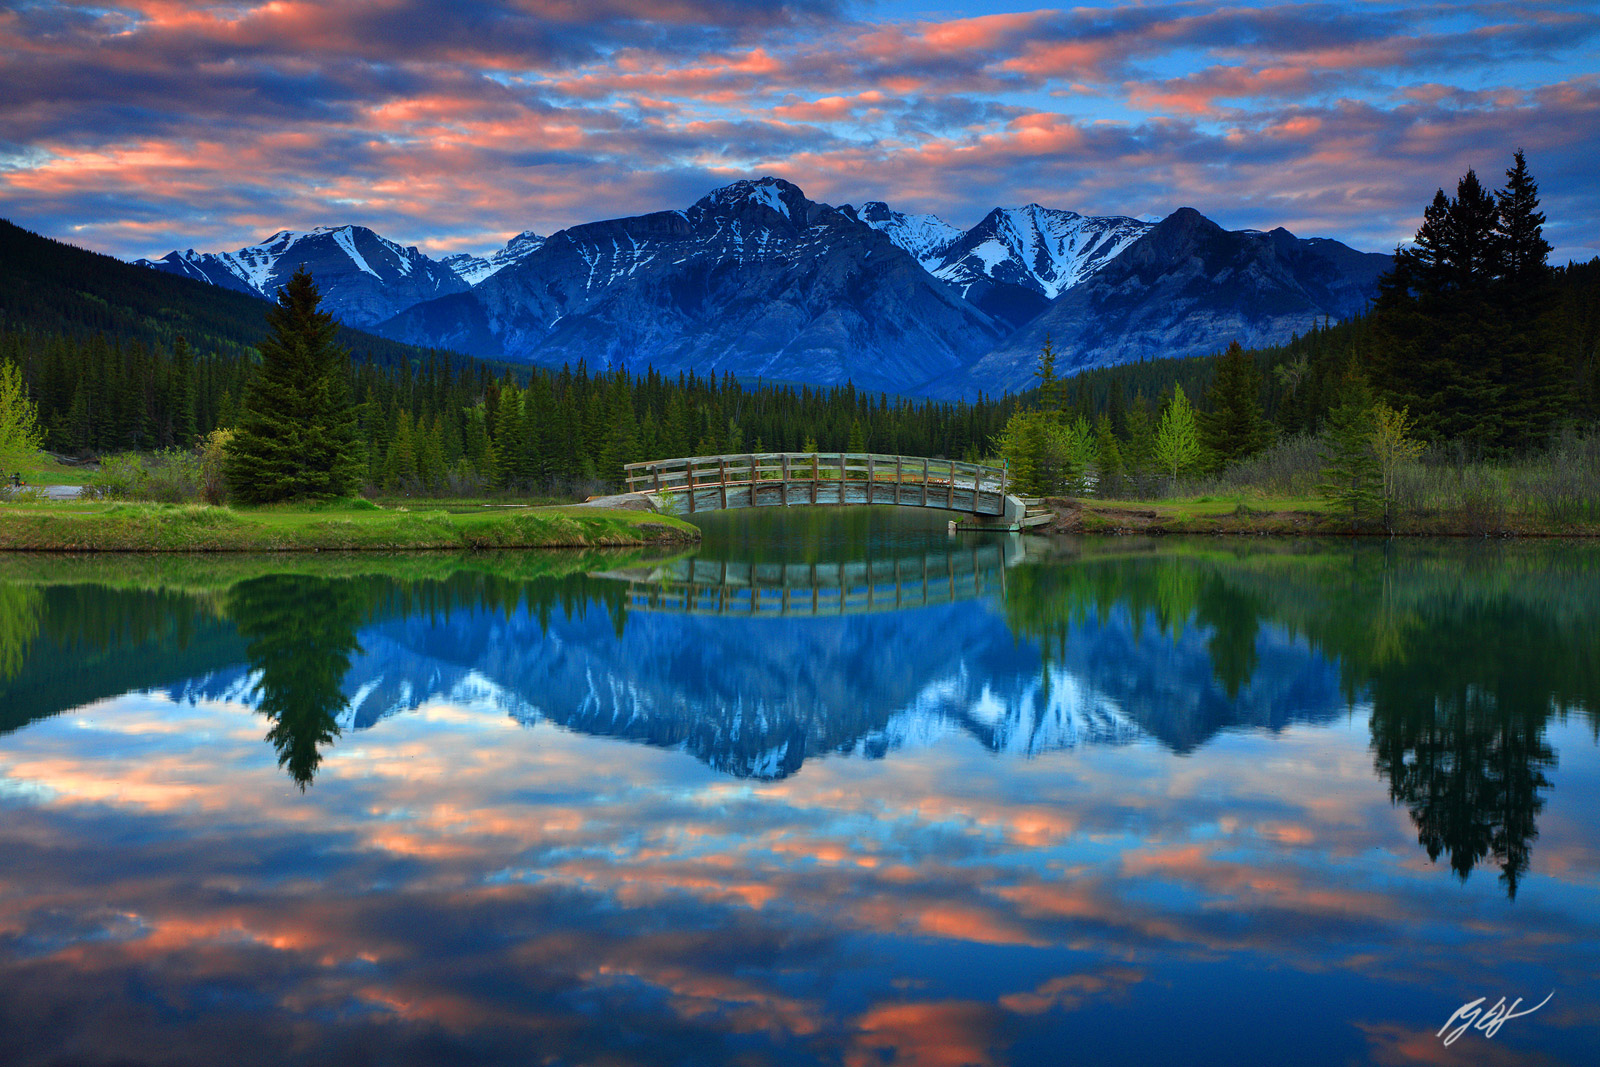 Saddle Peak and Hiking Bridge Reflected in Cascade Ponds in Banff National Park in Alberta, Canada